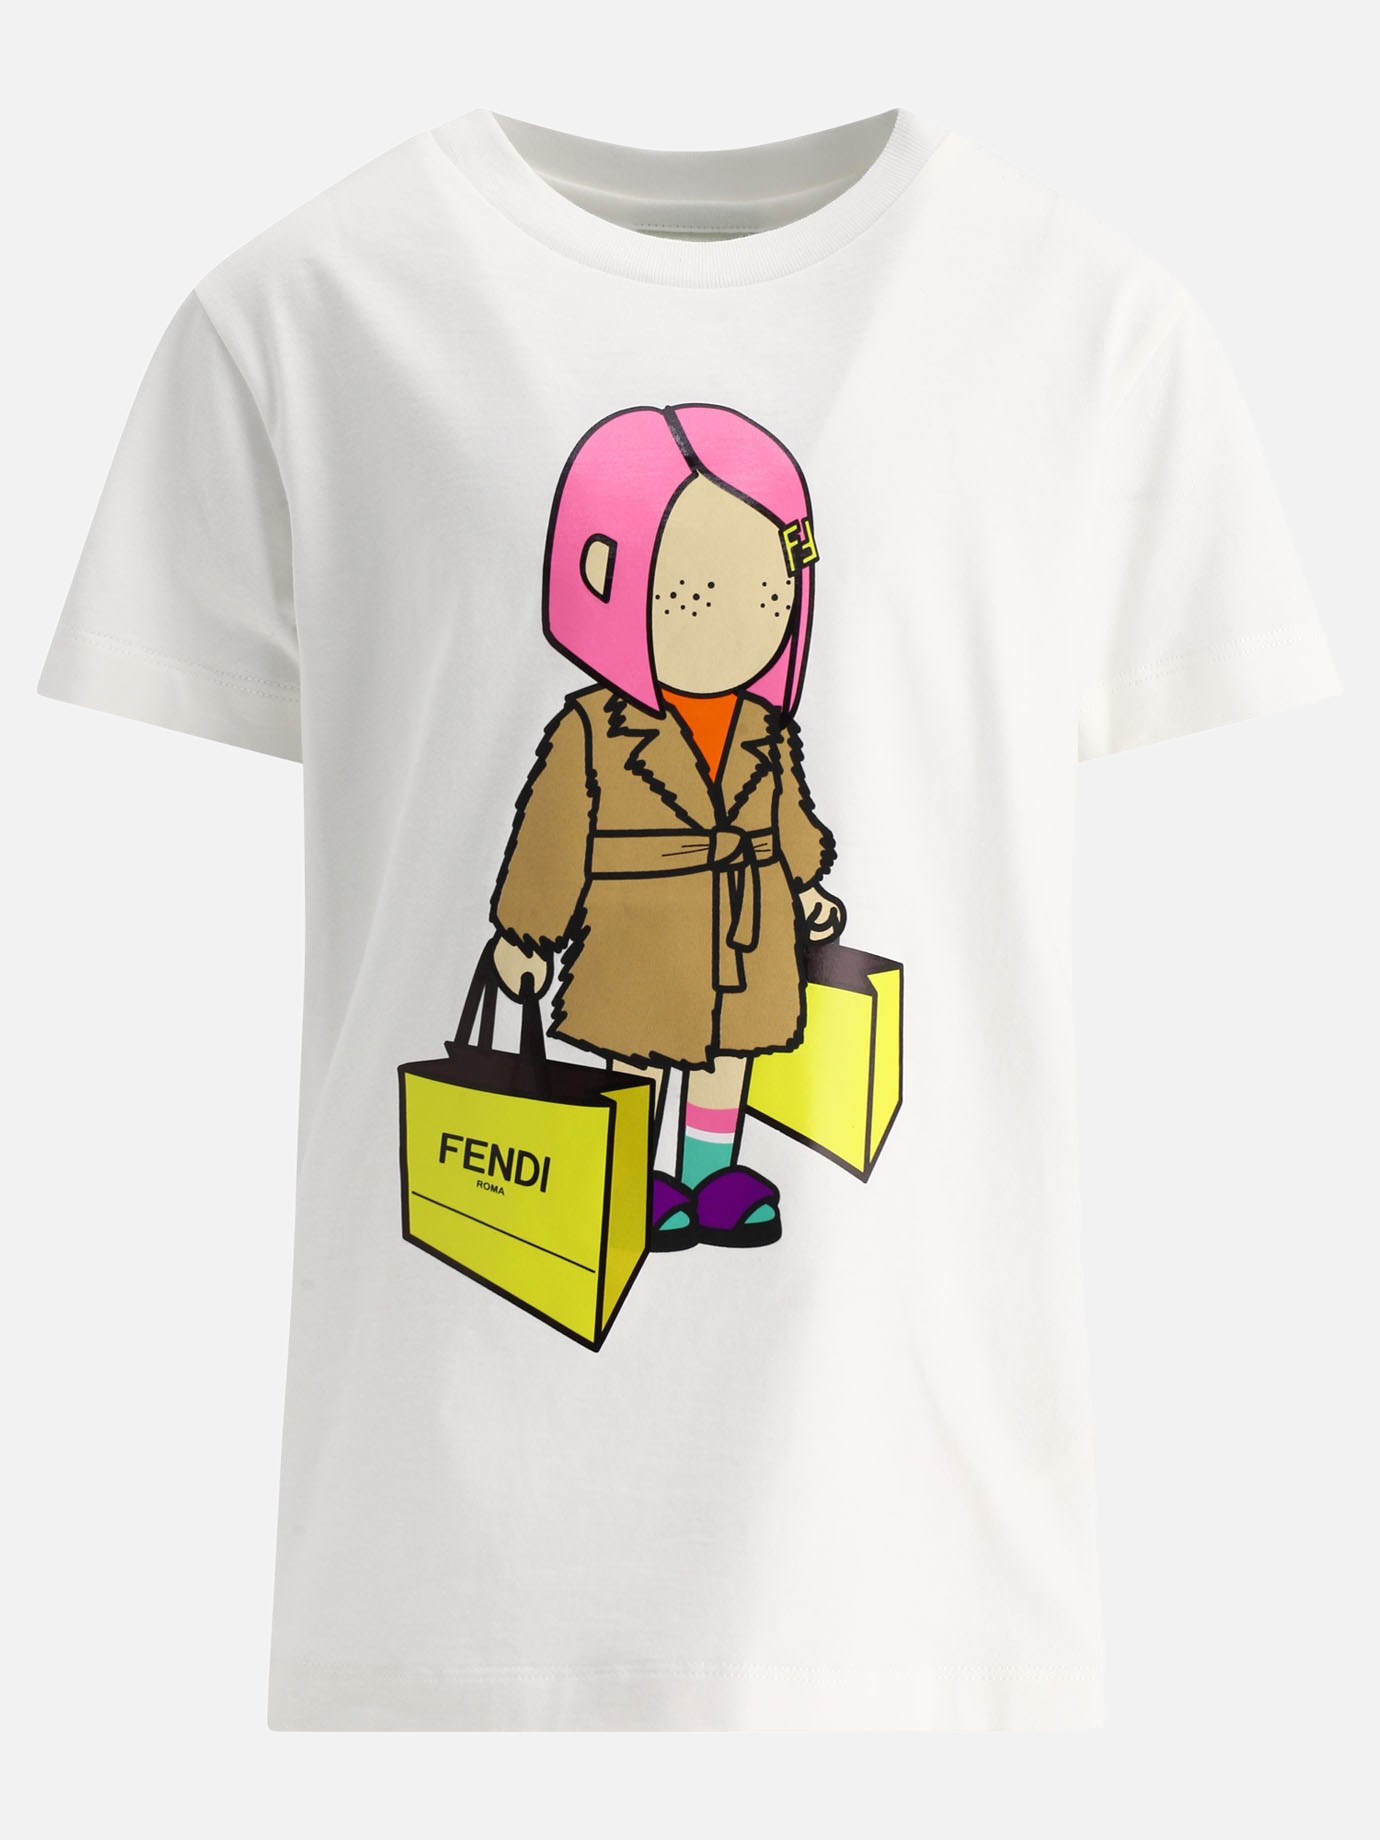  Shopping  t-shirtby Fendi Kids - 5